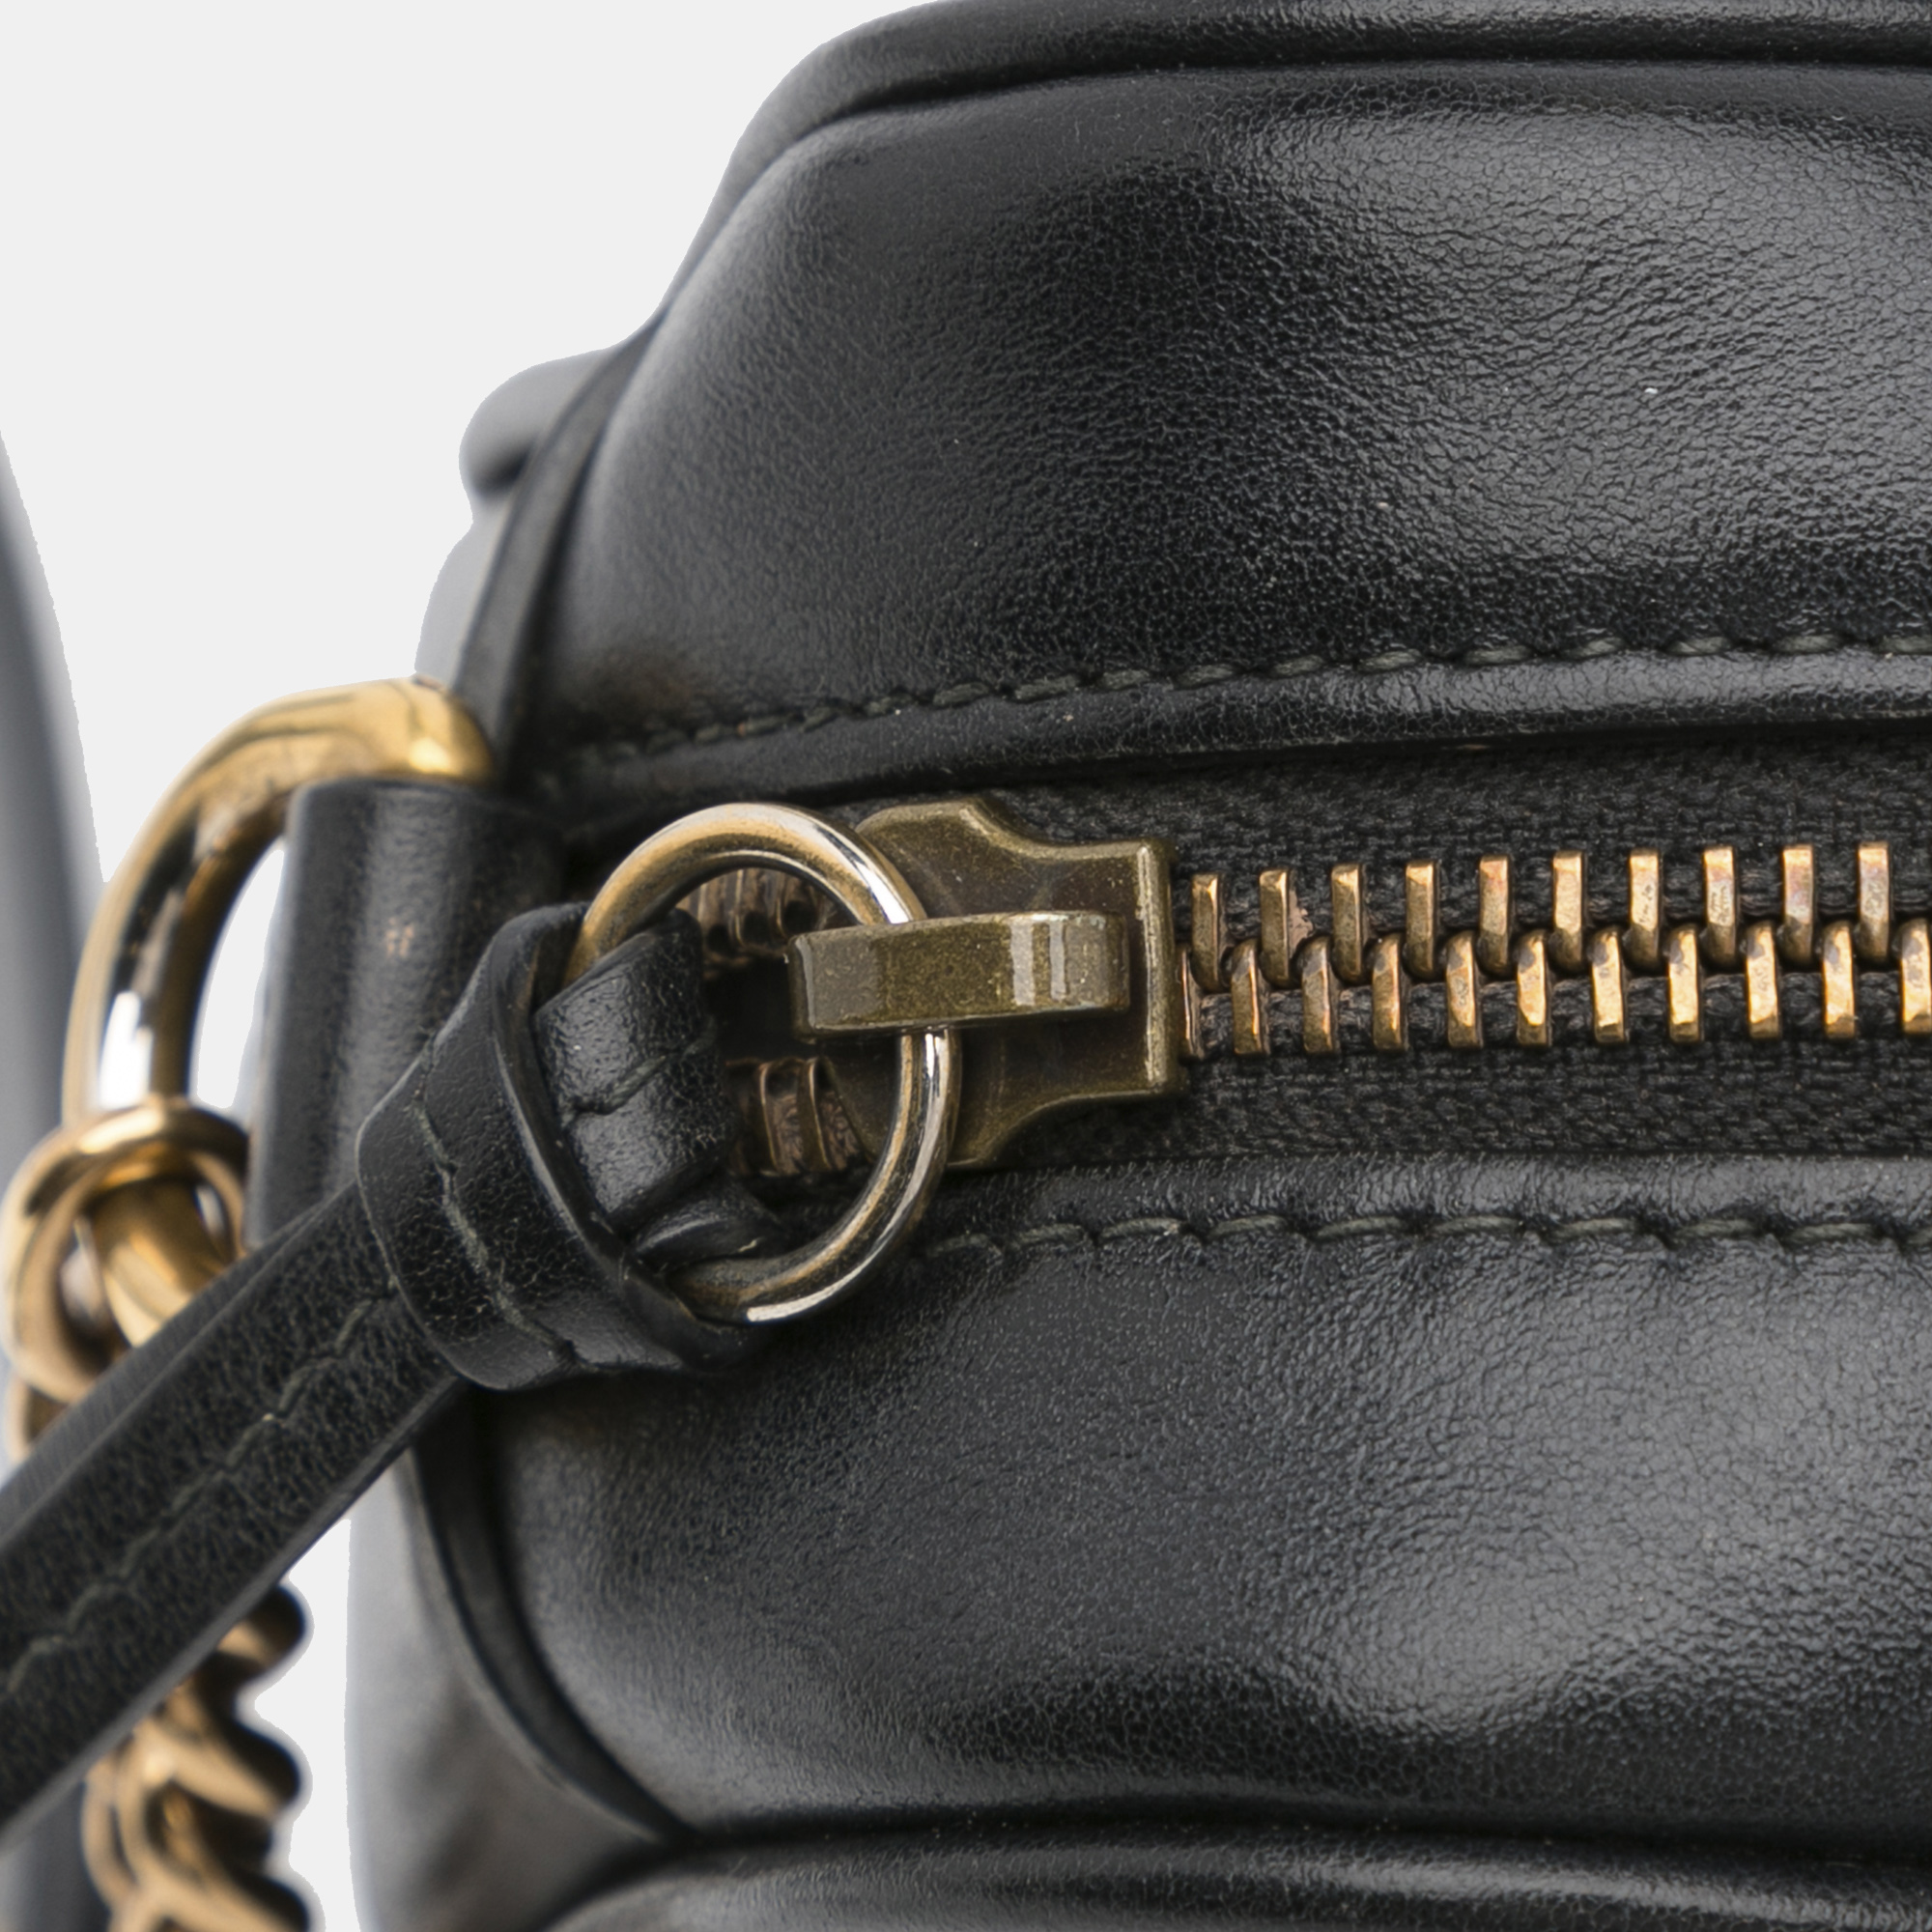 Gucci Mini GG Marmont Crossbody Bag